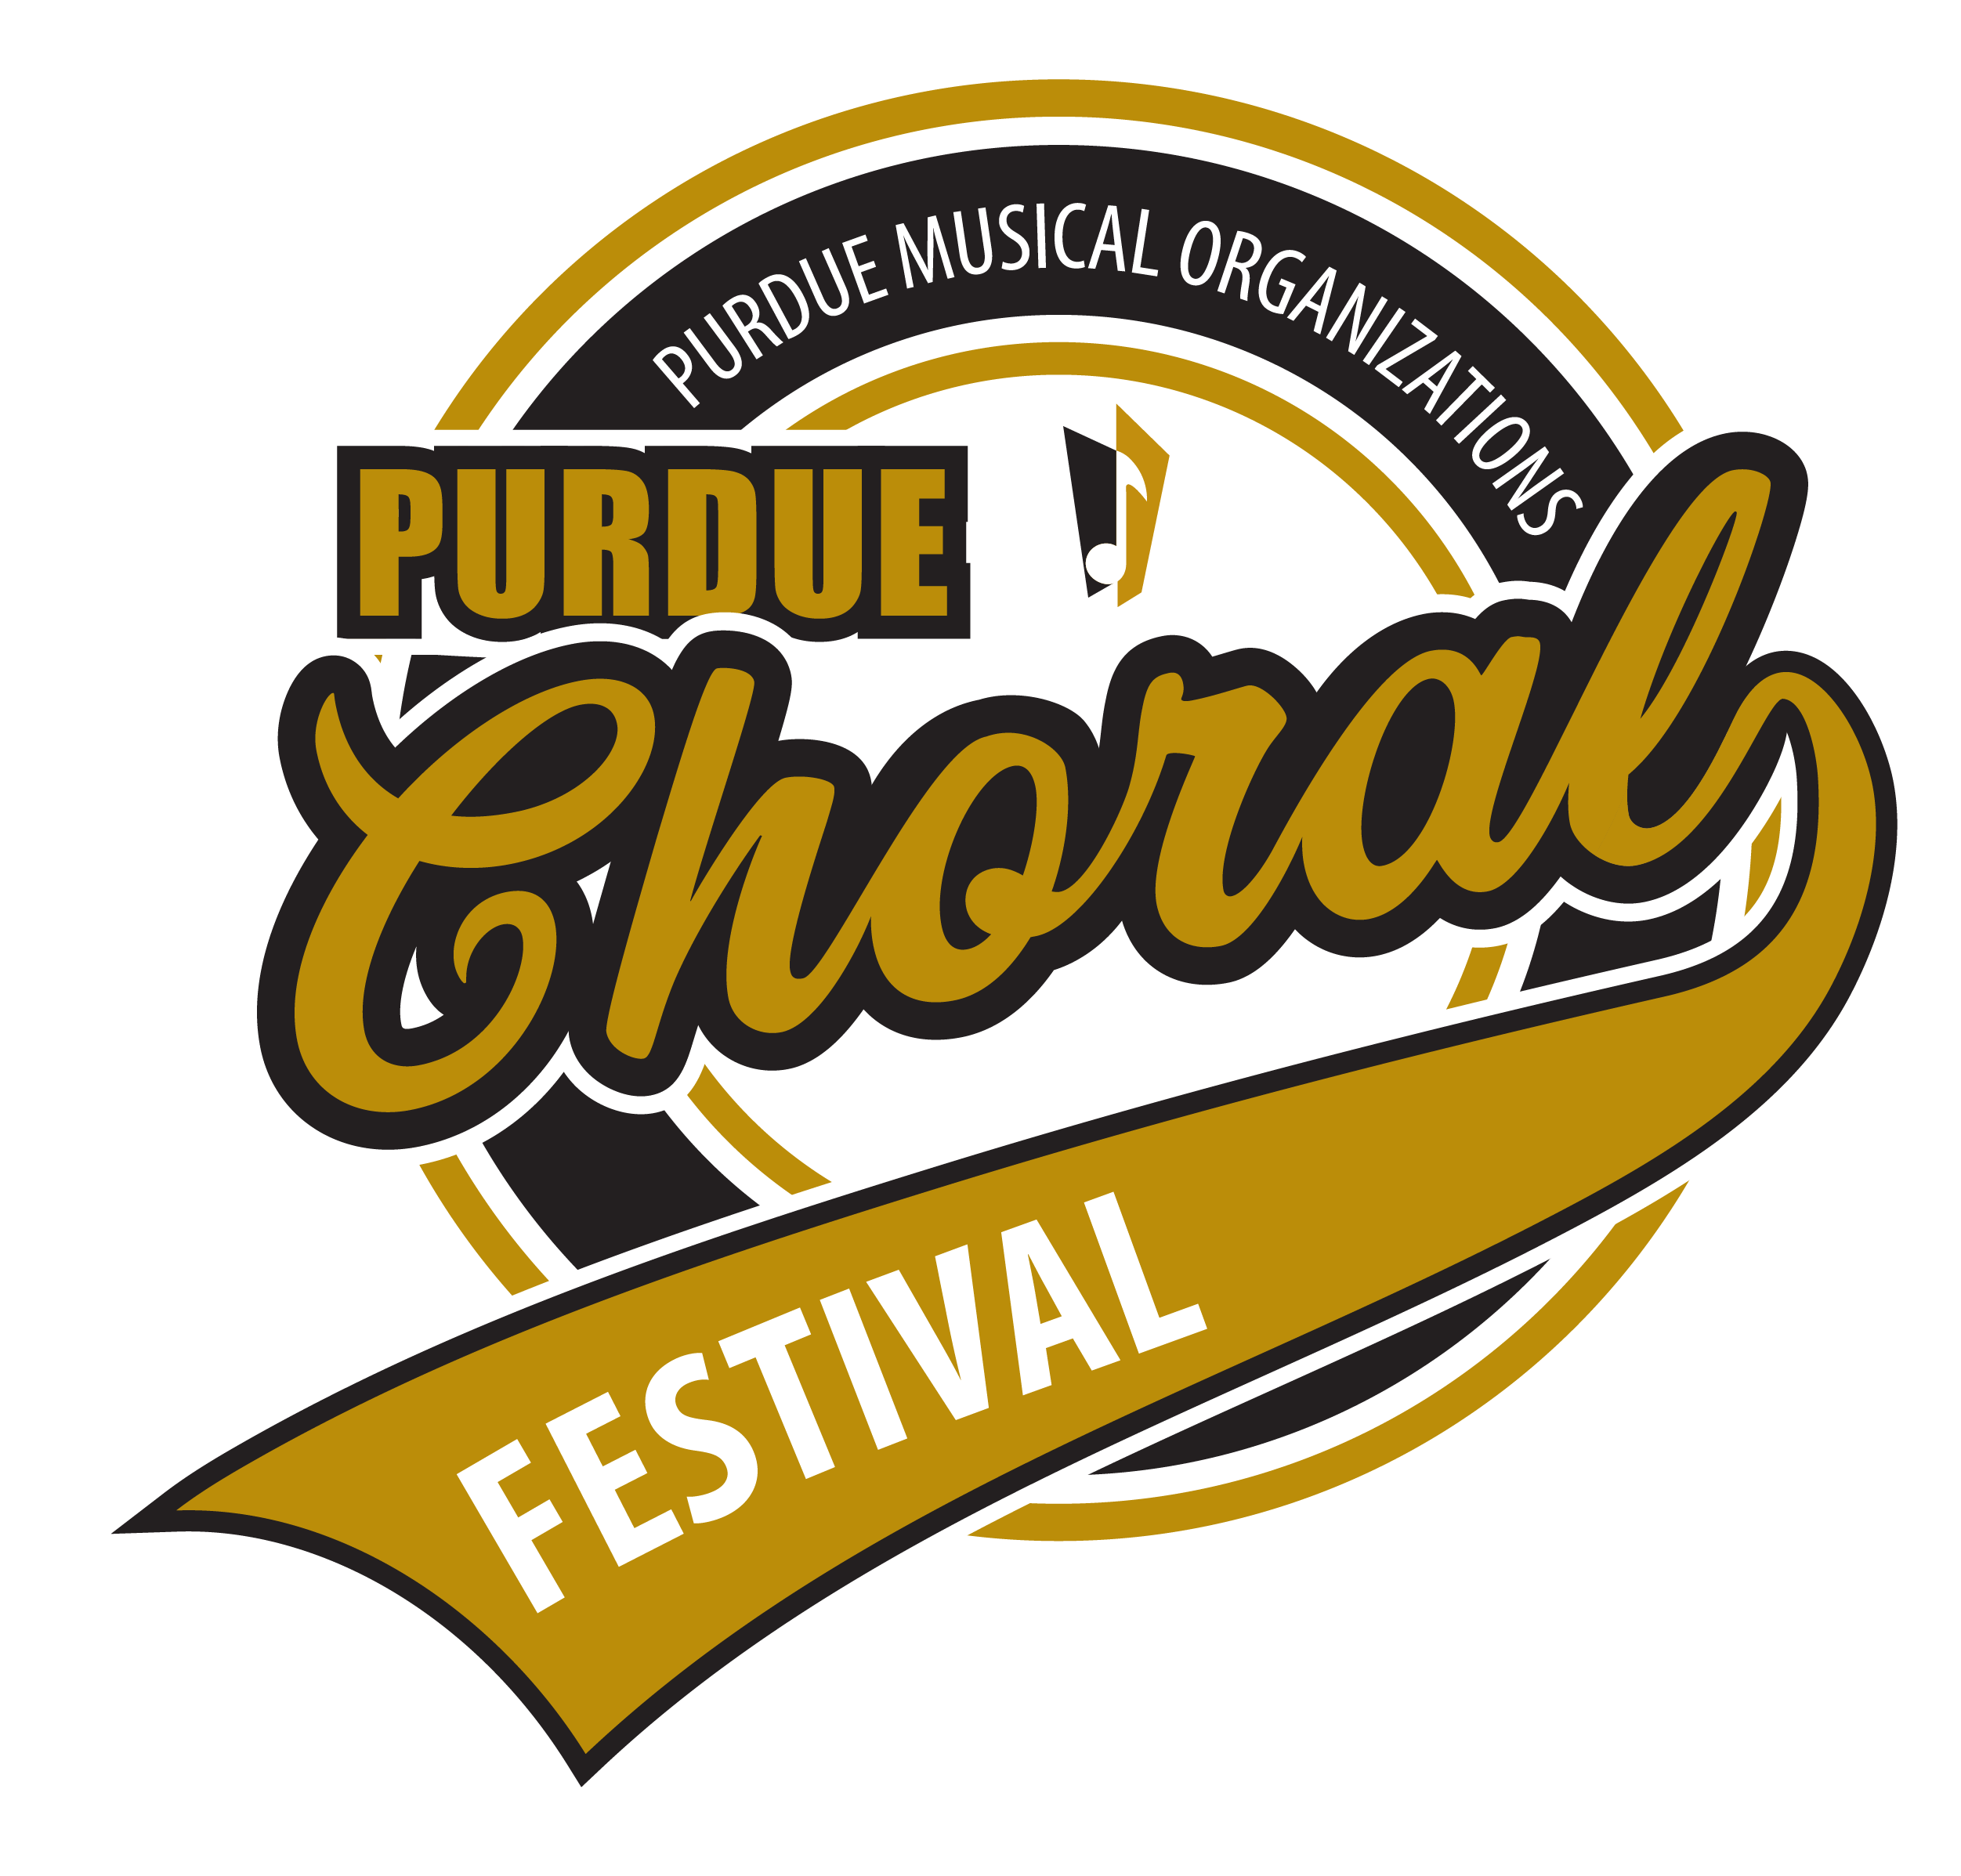 Purdue Choral Festival logo